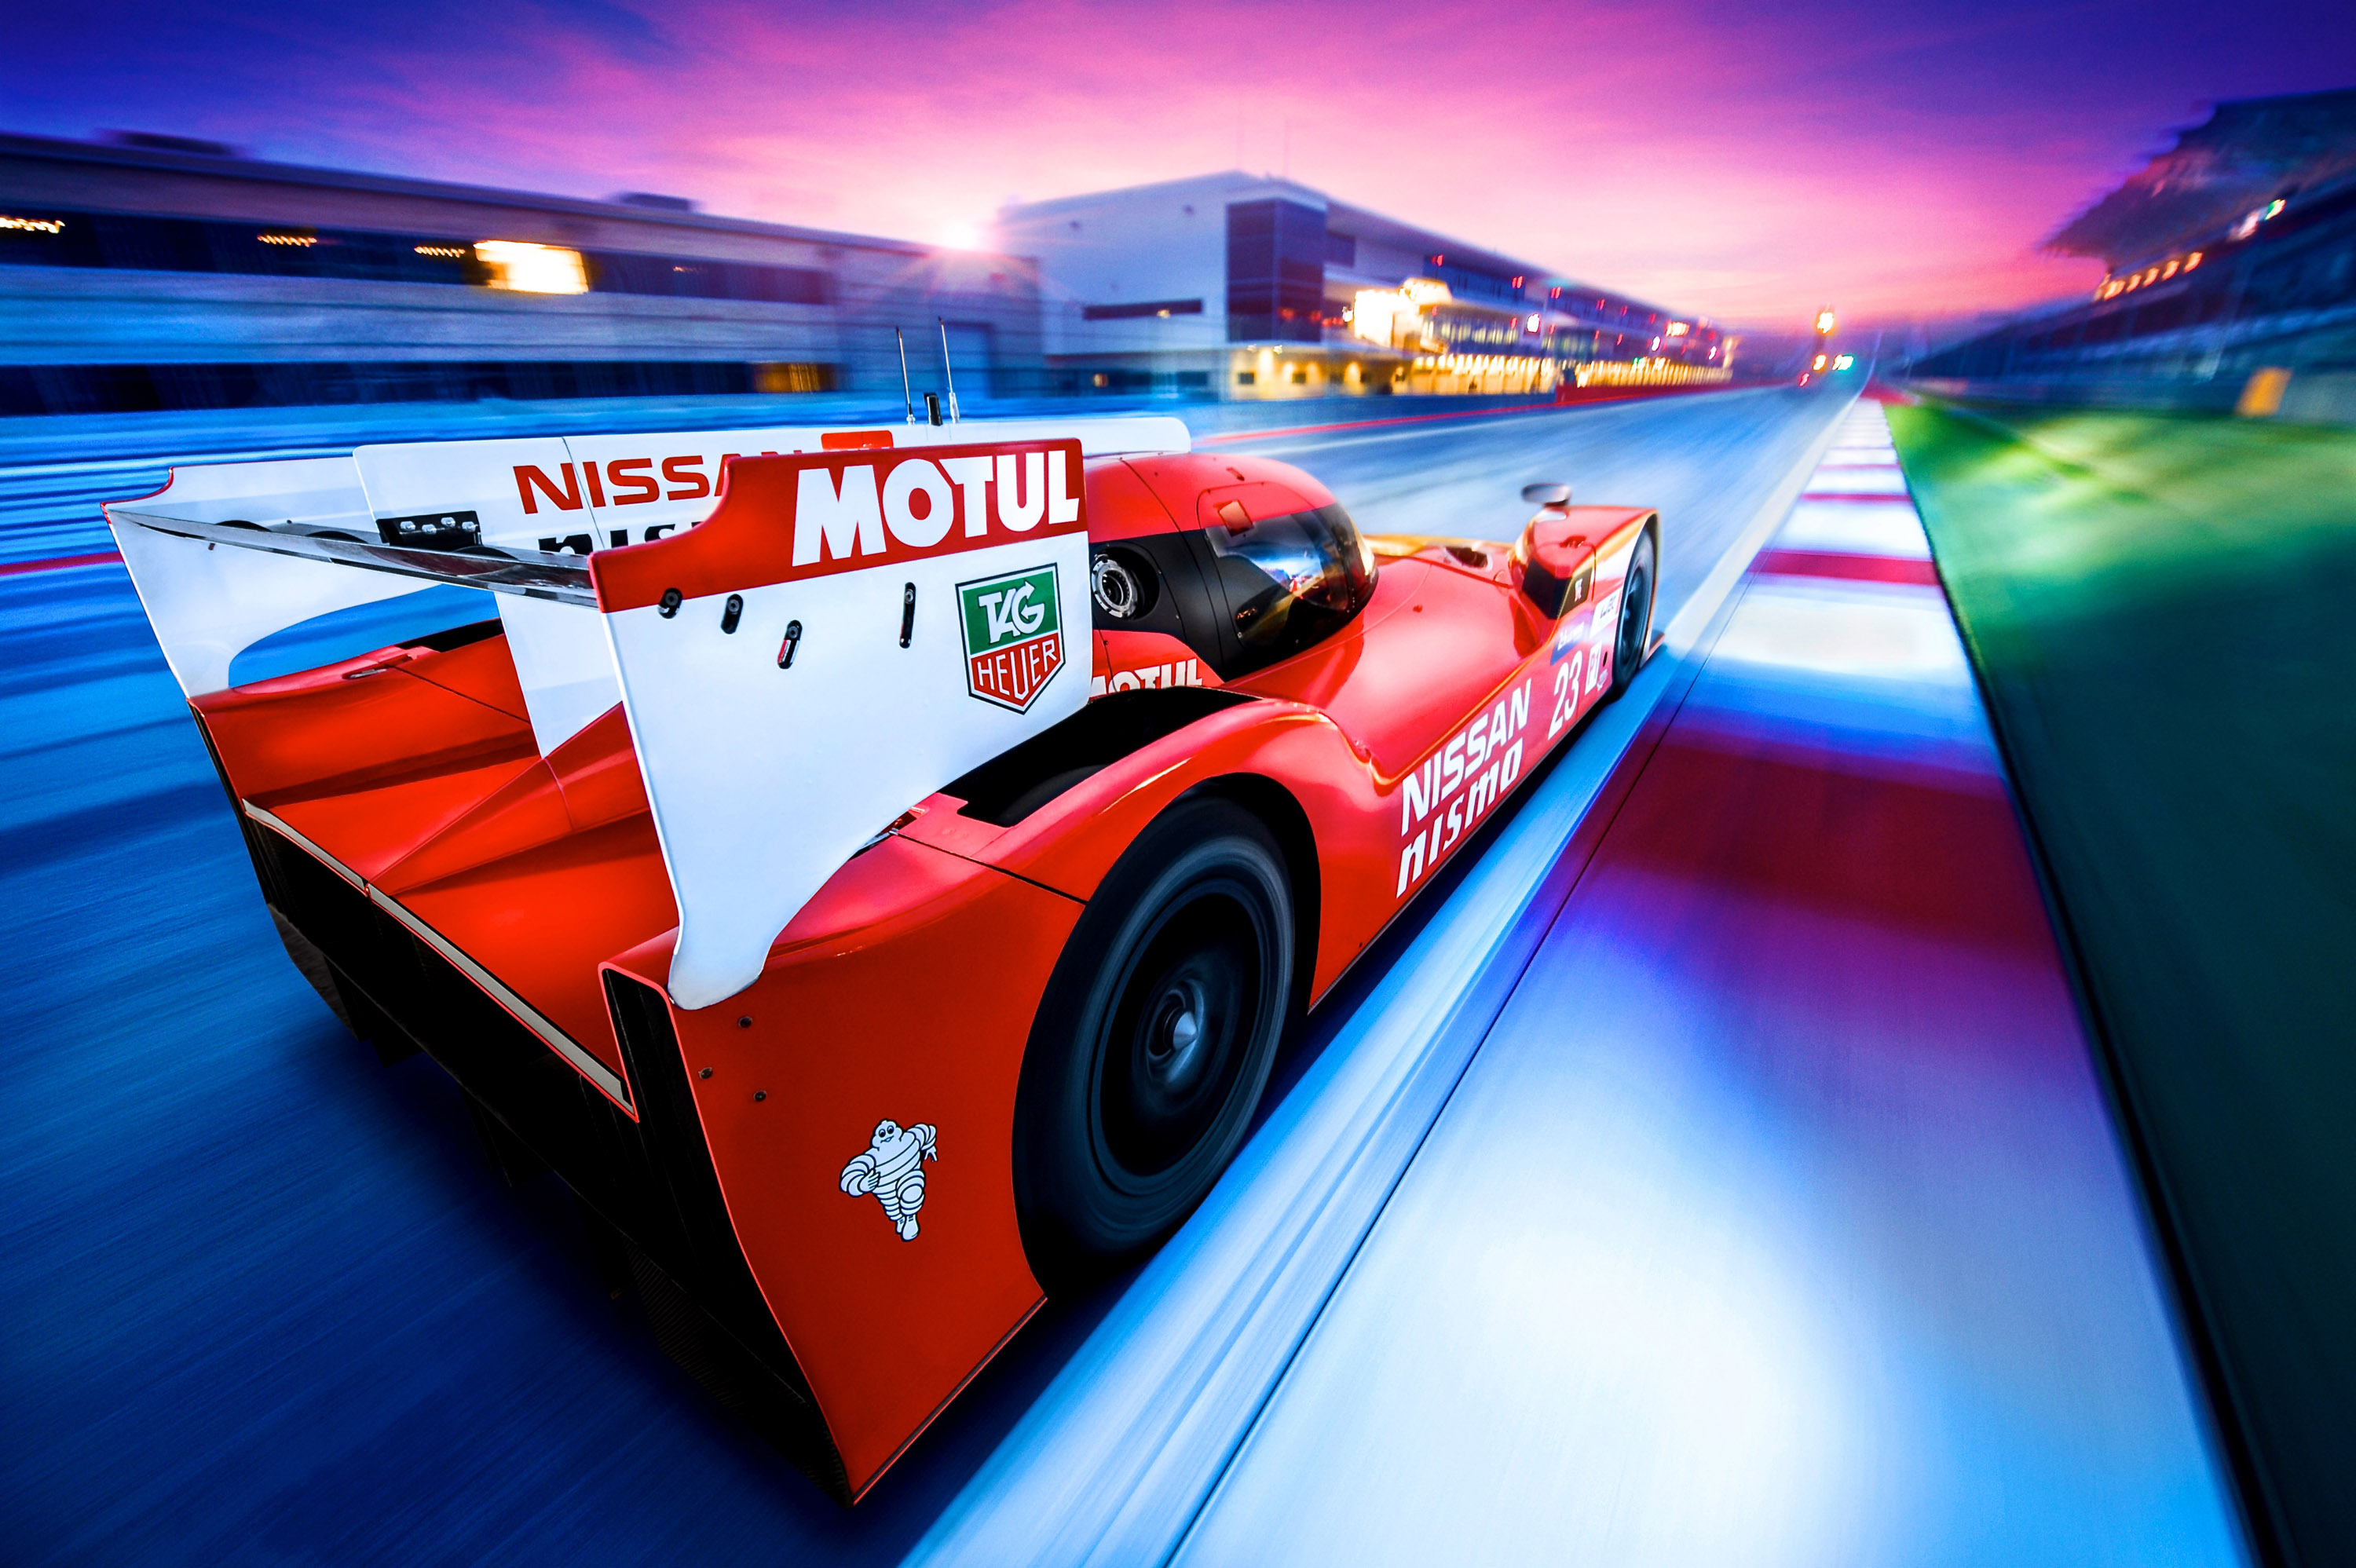 2015 Nissan GT-R LM Nismo Racecar - HD Pictures @ carsinvasion.com